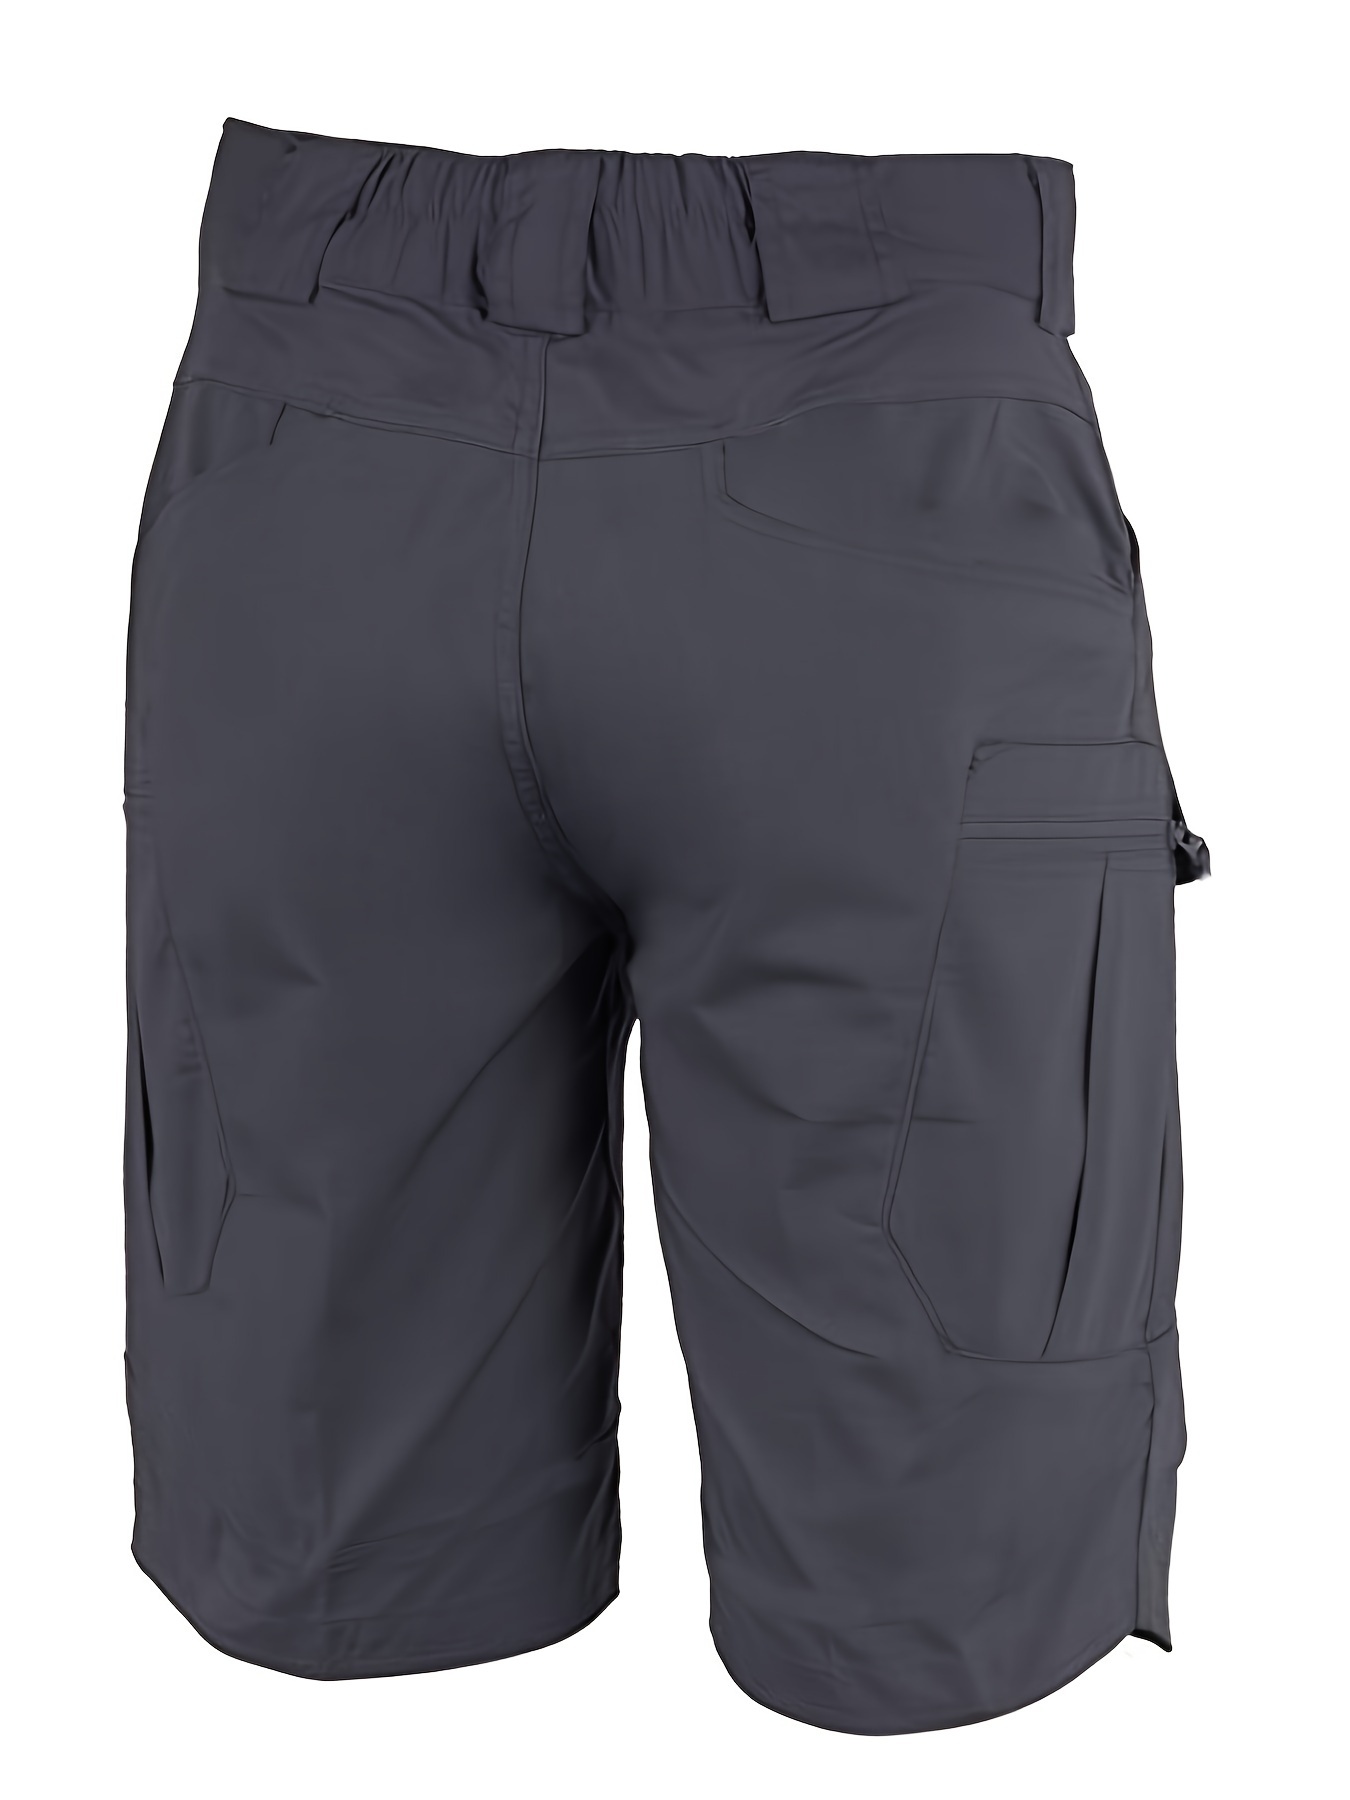 Men's Multi-Pocket Tactical Shorts Multi-Purpose Cargo Shorts Outdoor Waterproof Hiking Track Shorts